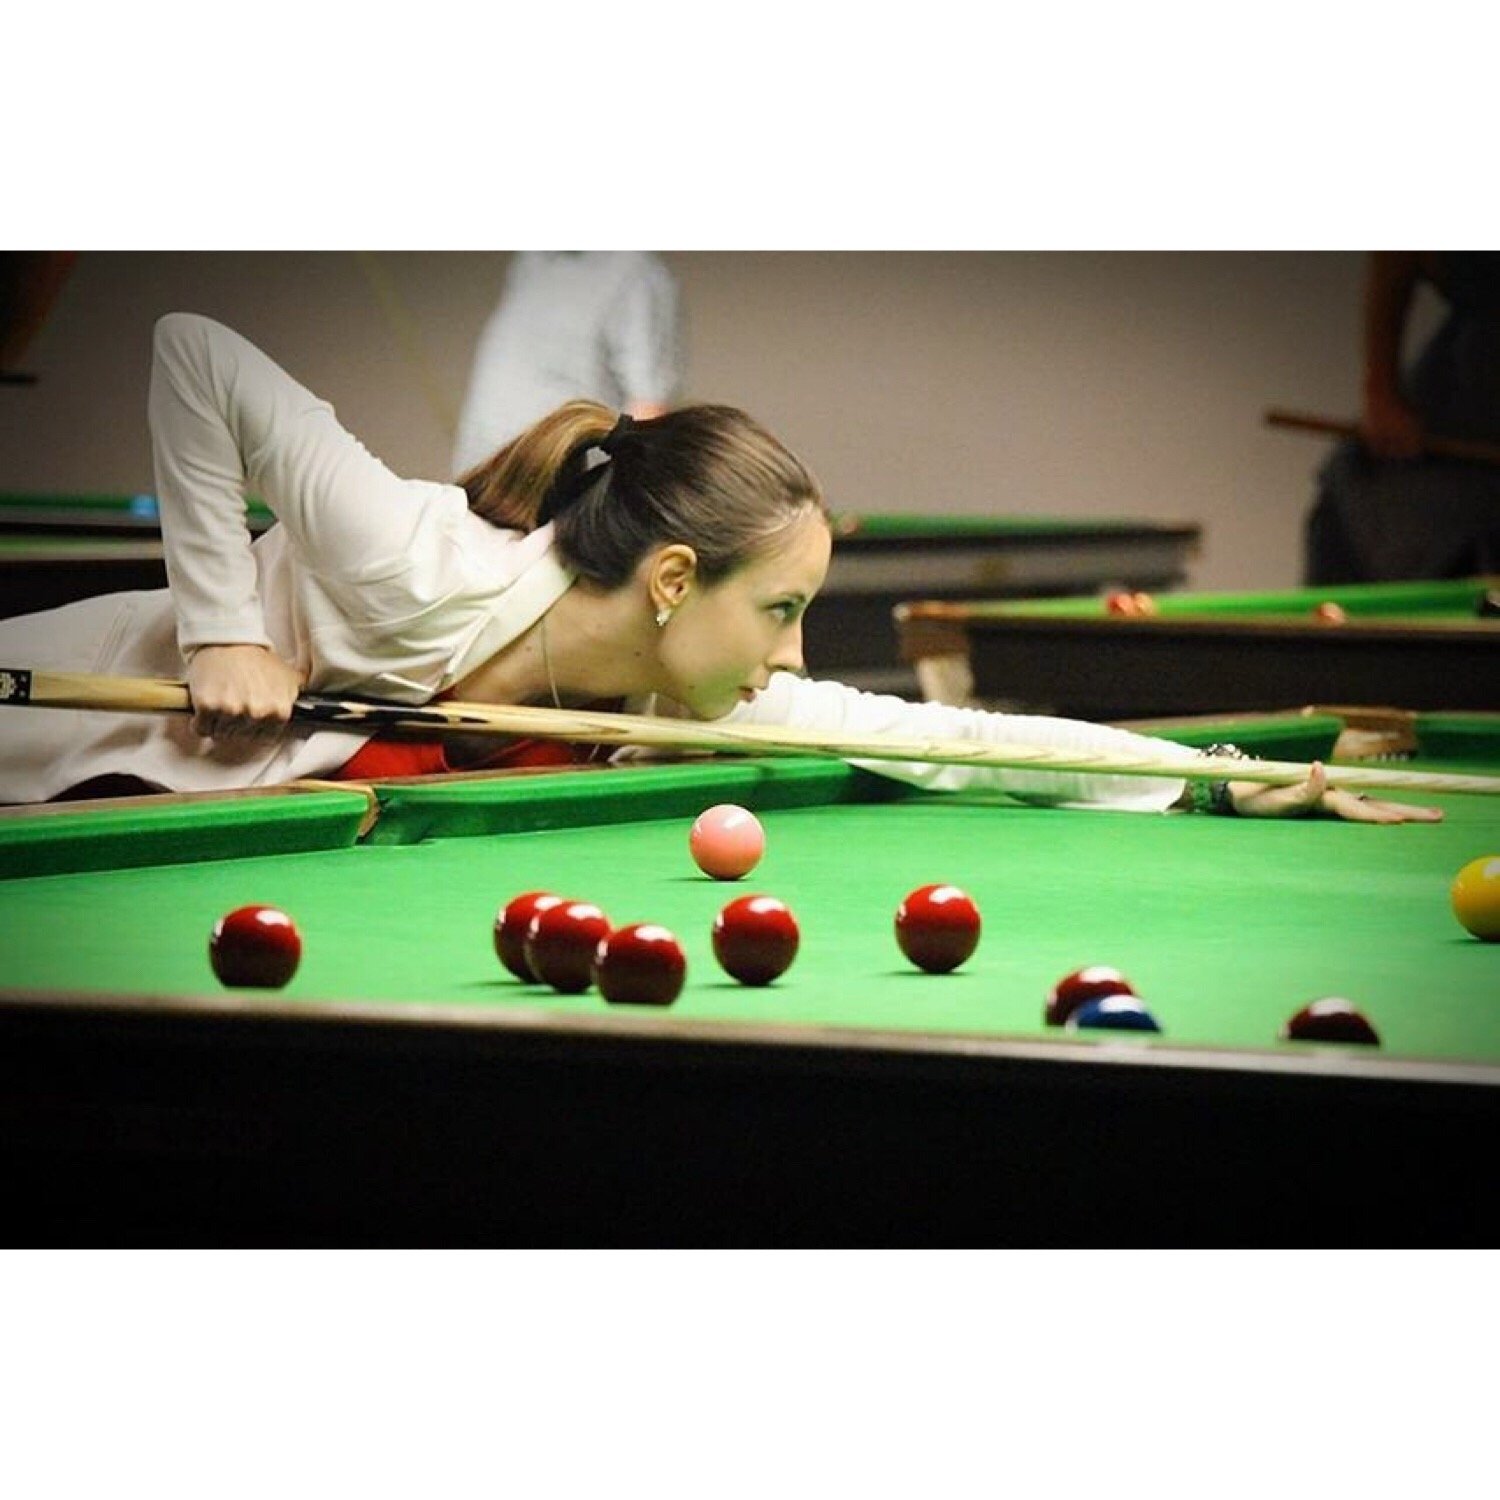 snooker player🎱
Romania🇹🇩  I play in the EBSA & IBSF events. My full name is Corina Andreea Maracine.